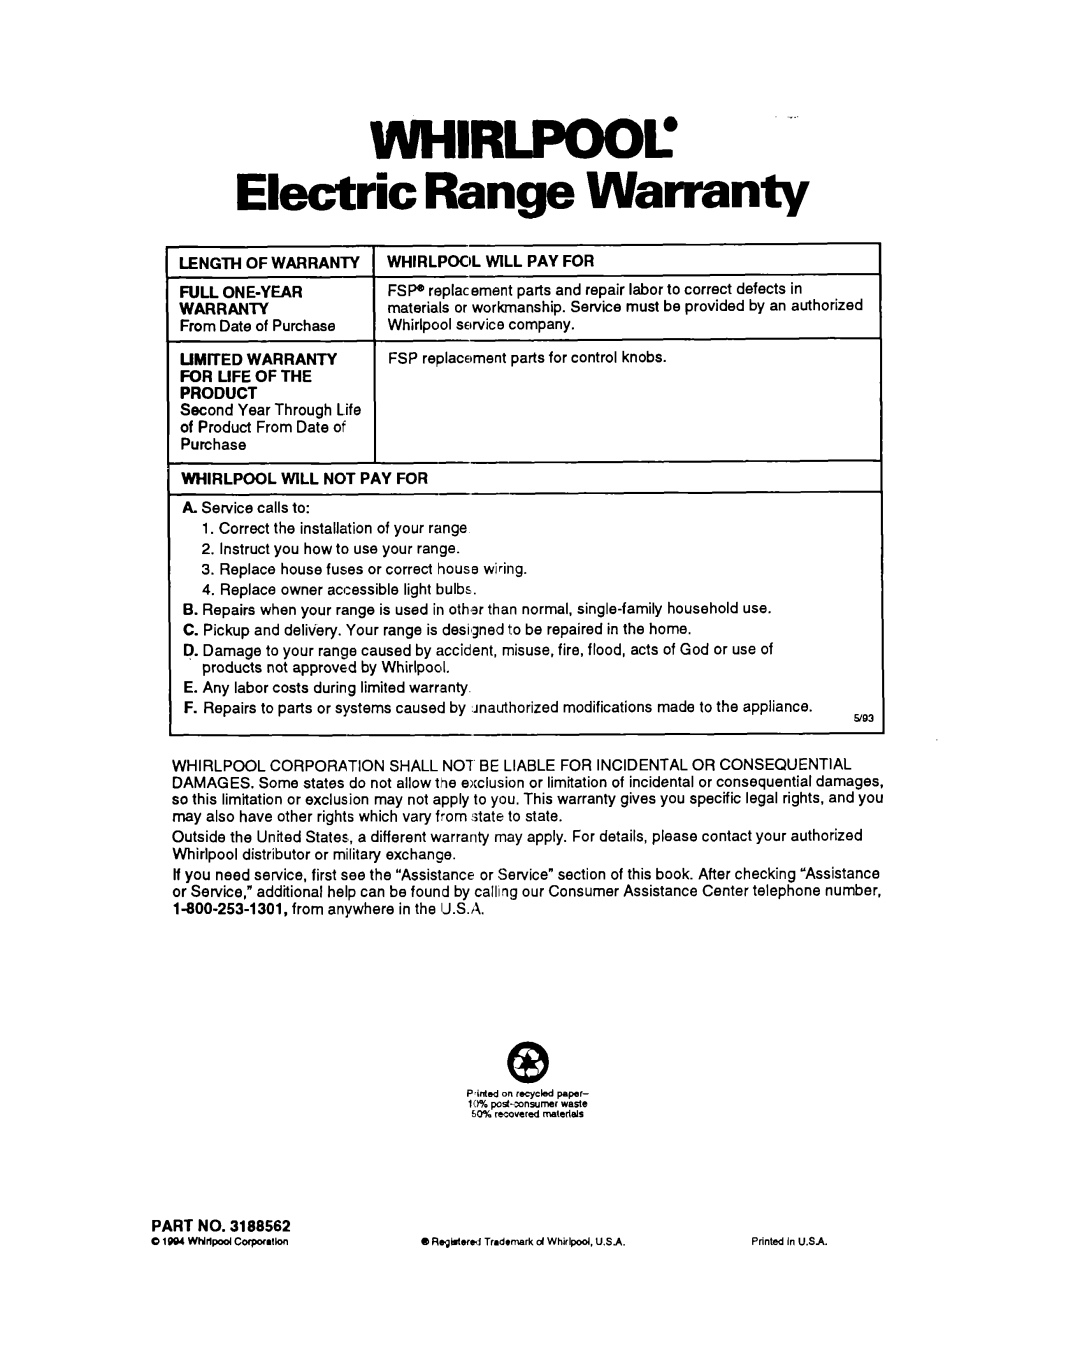 Whirlpool RS600BXB manual Electric Range Warranty, Whirlpool’ -‘ 